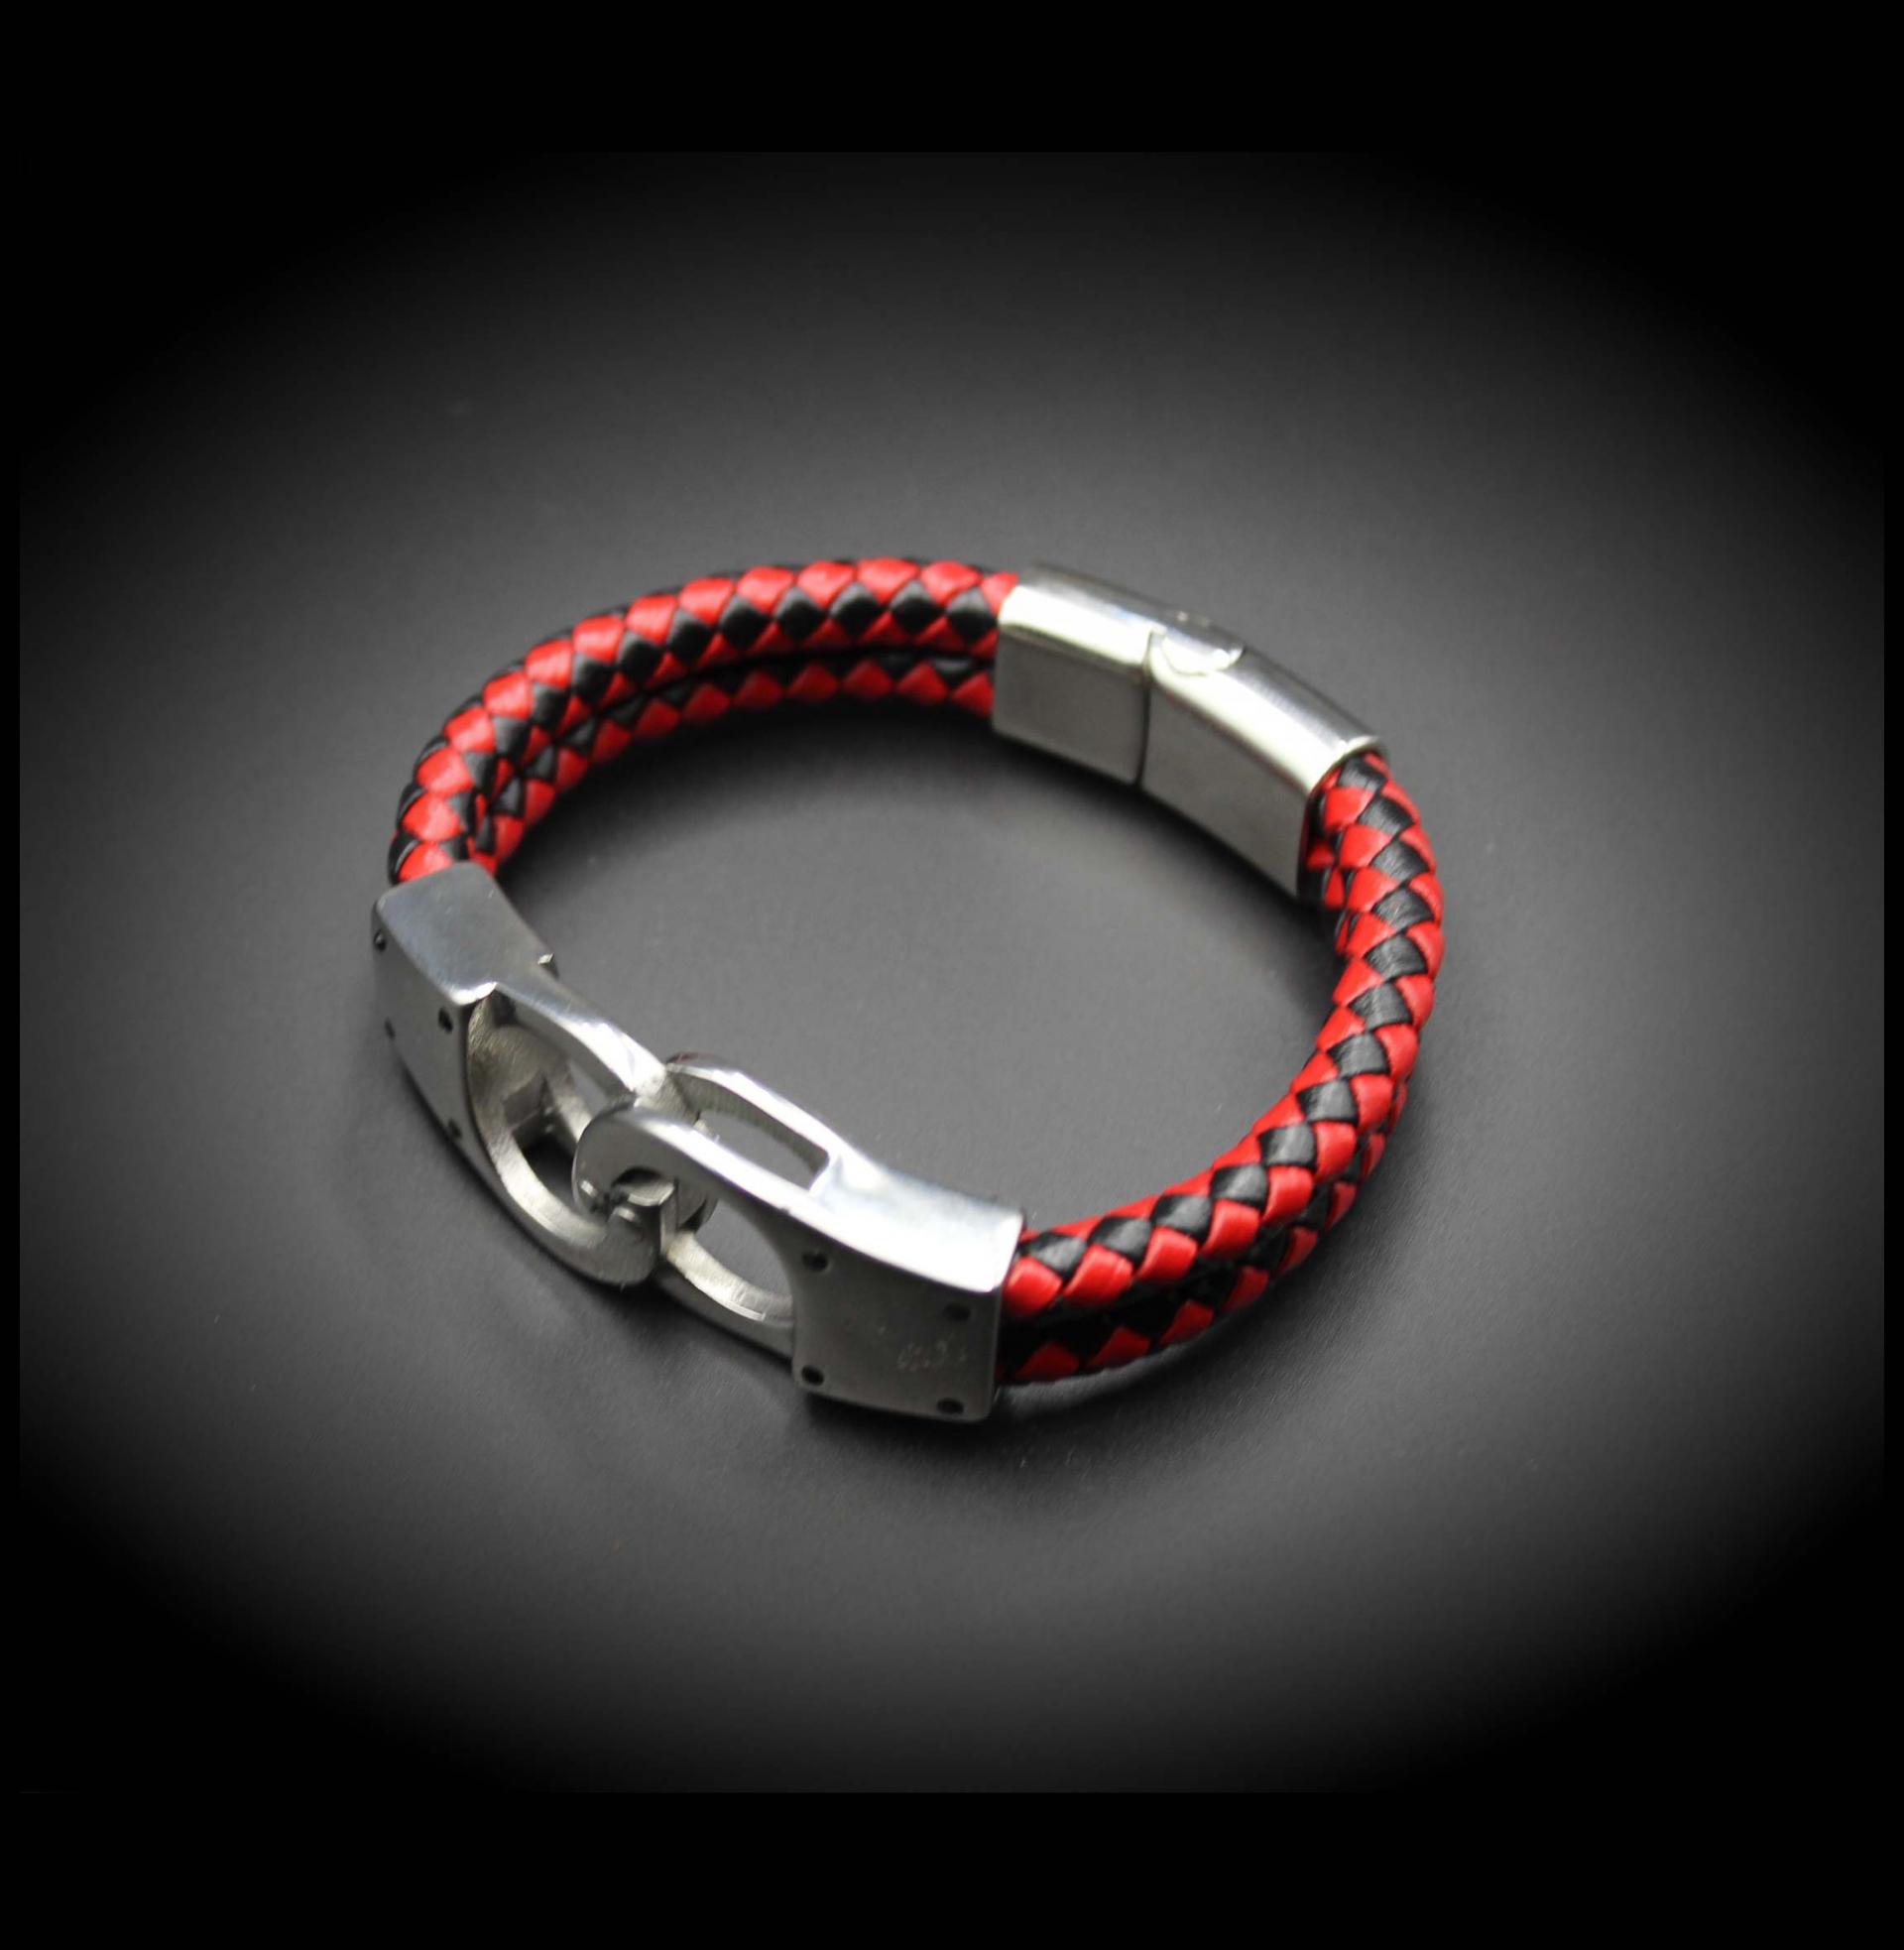 Handcuff Design Leather & Steel Red & Black Bracelet.